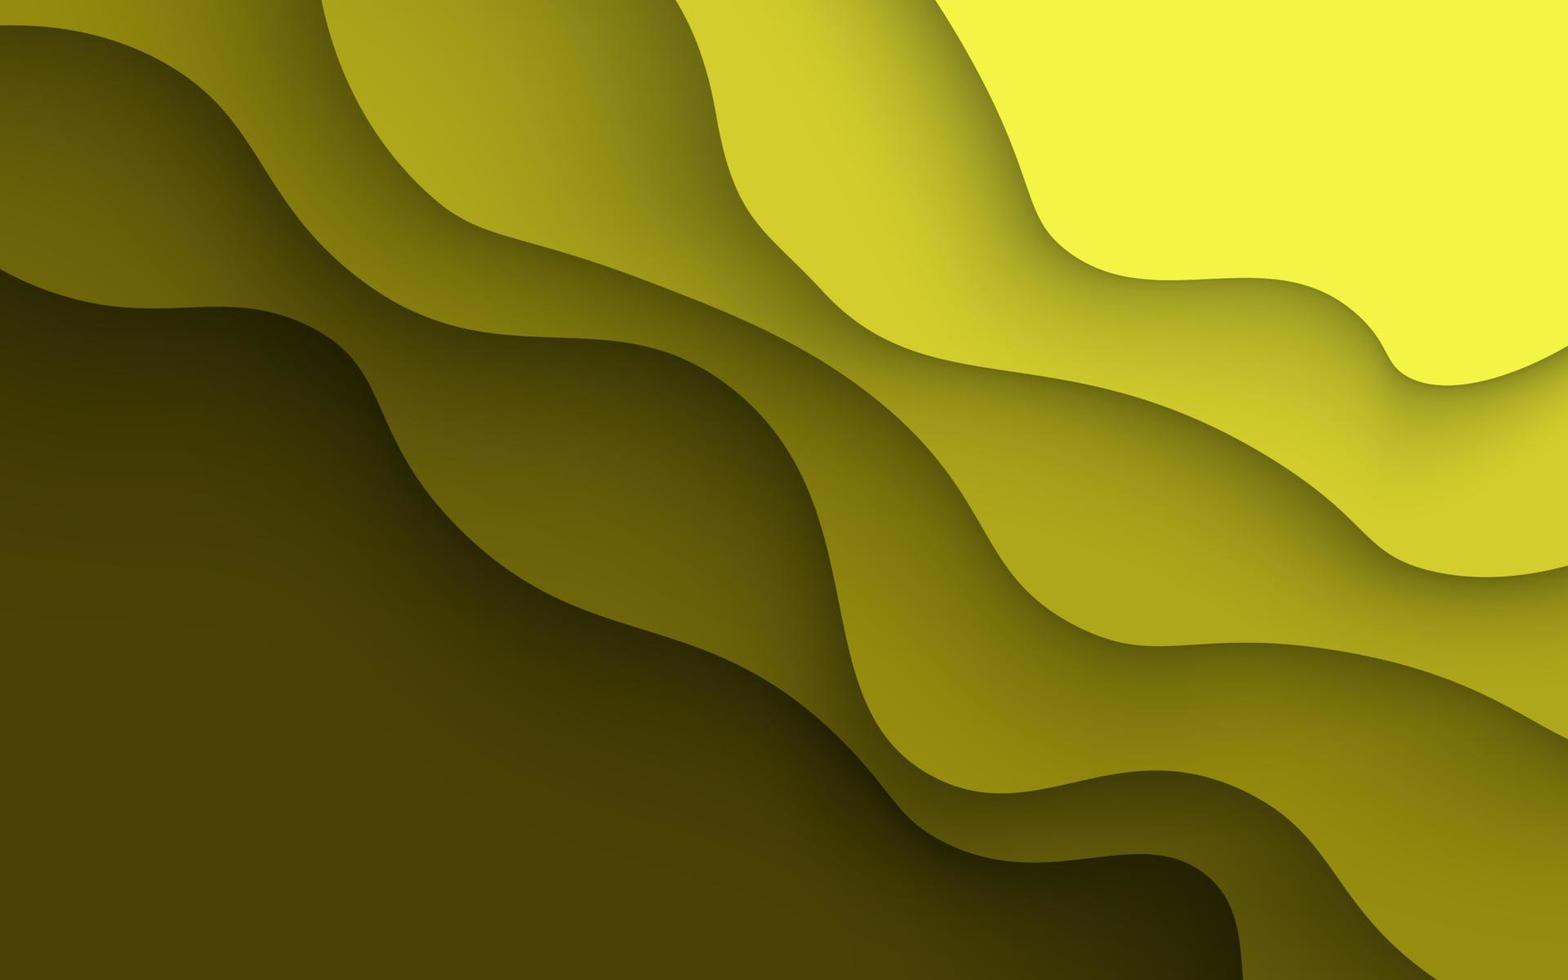 várias camadas de textura de cor amarela 3d camadas de corte de papel no banner de gradiente vetorial. design de fundo de arte de corte de papel abstrato para modelo de site. conceito de mapa de topografia ou corte de papel de origami suave vetor